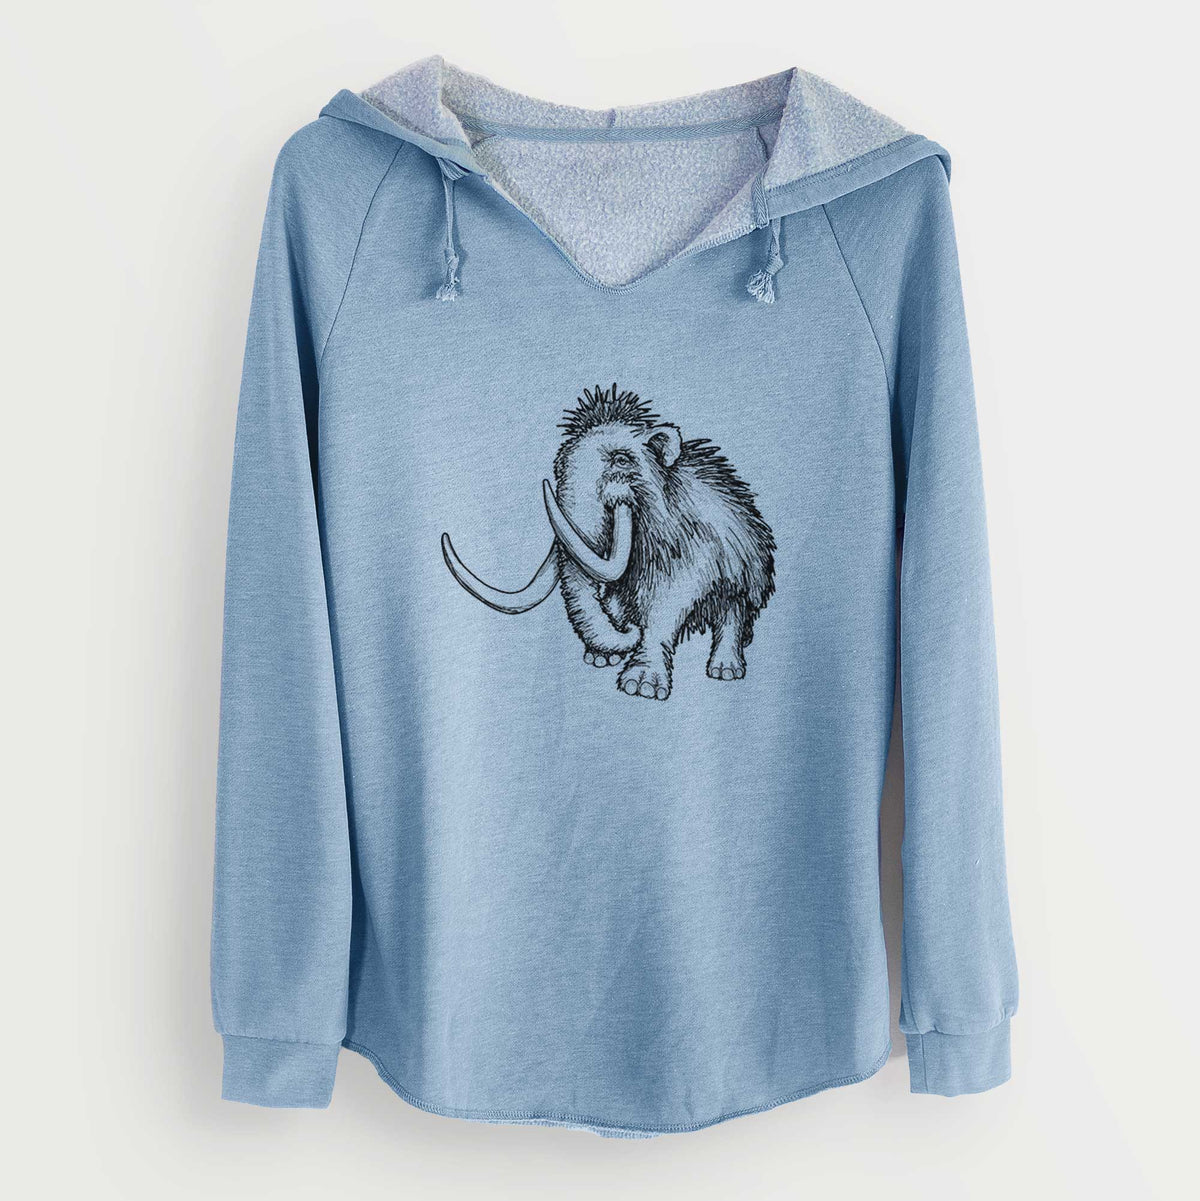 Woolly Mammoth - Mammuthus Primigenius - Cali Wave Hooded Sweatshirt